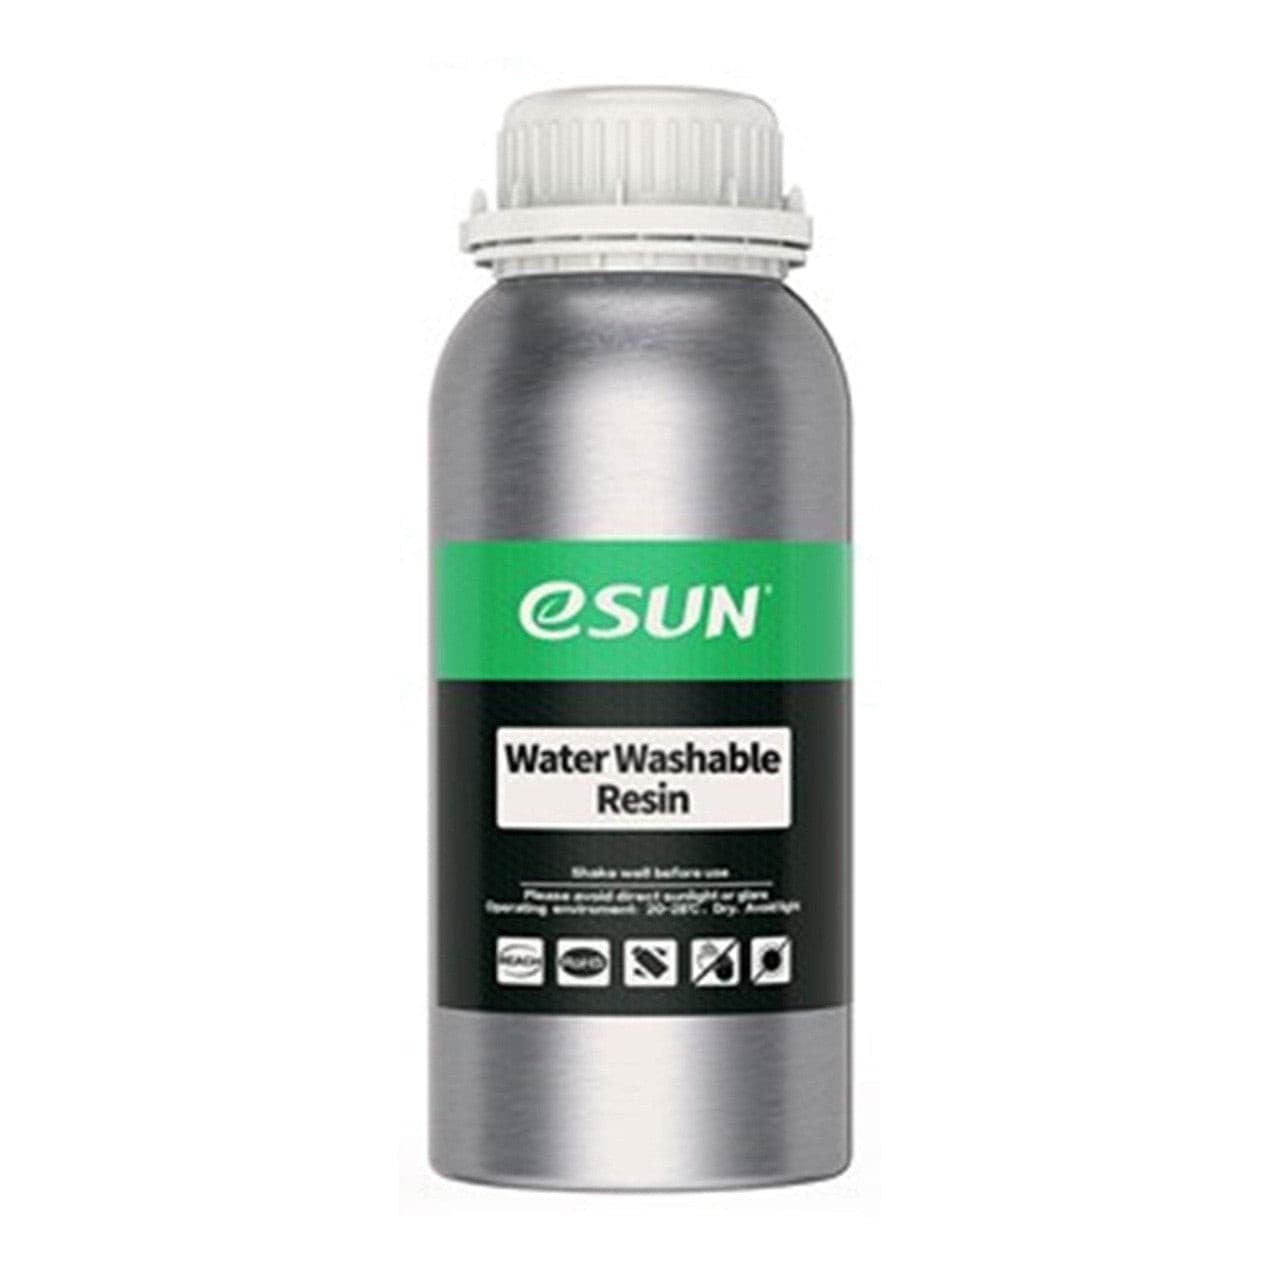 eSun Water Washable Resin - 500ml.